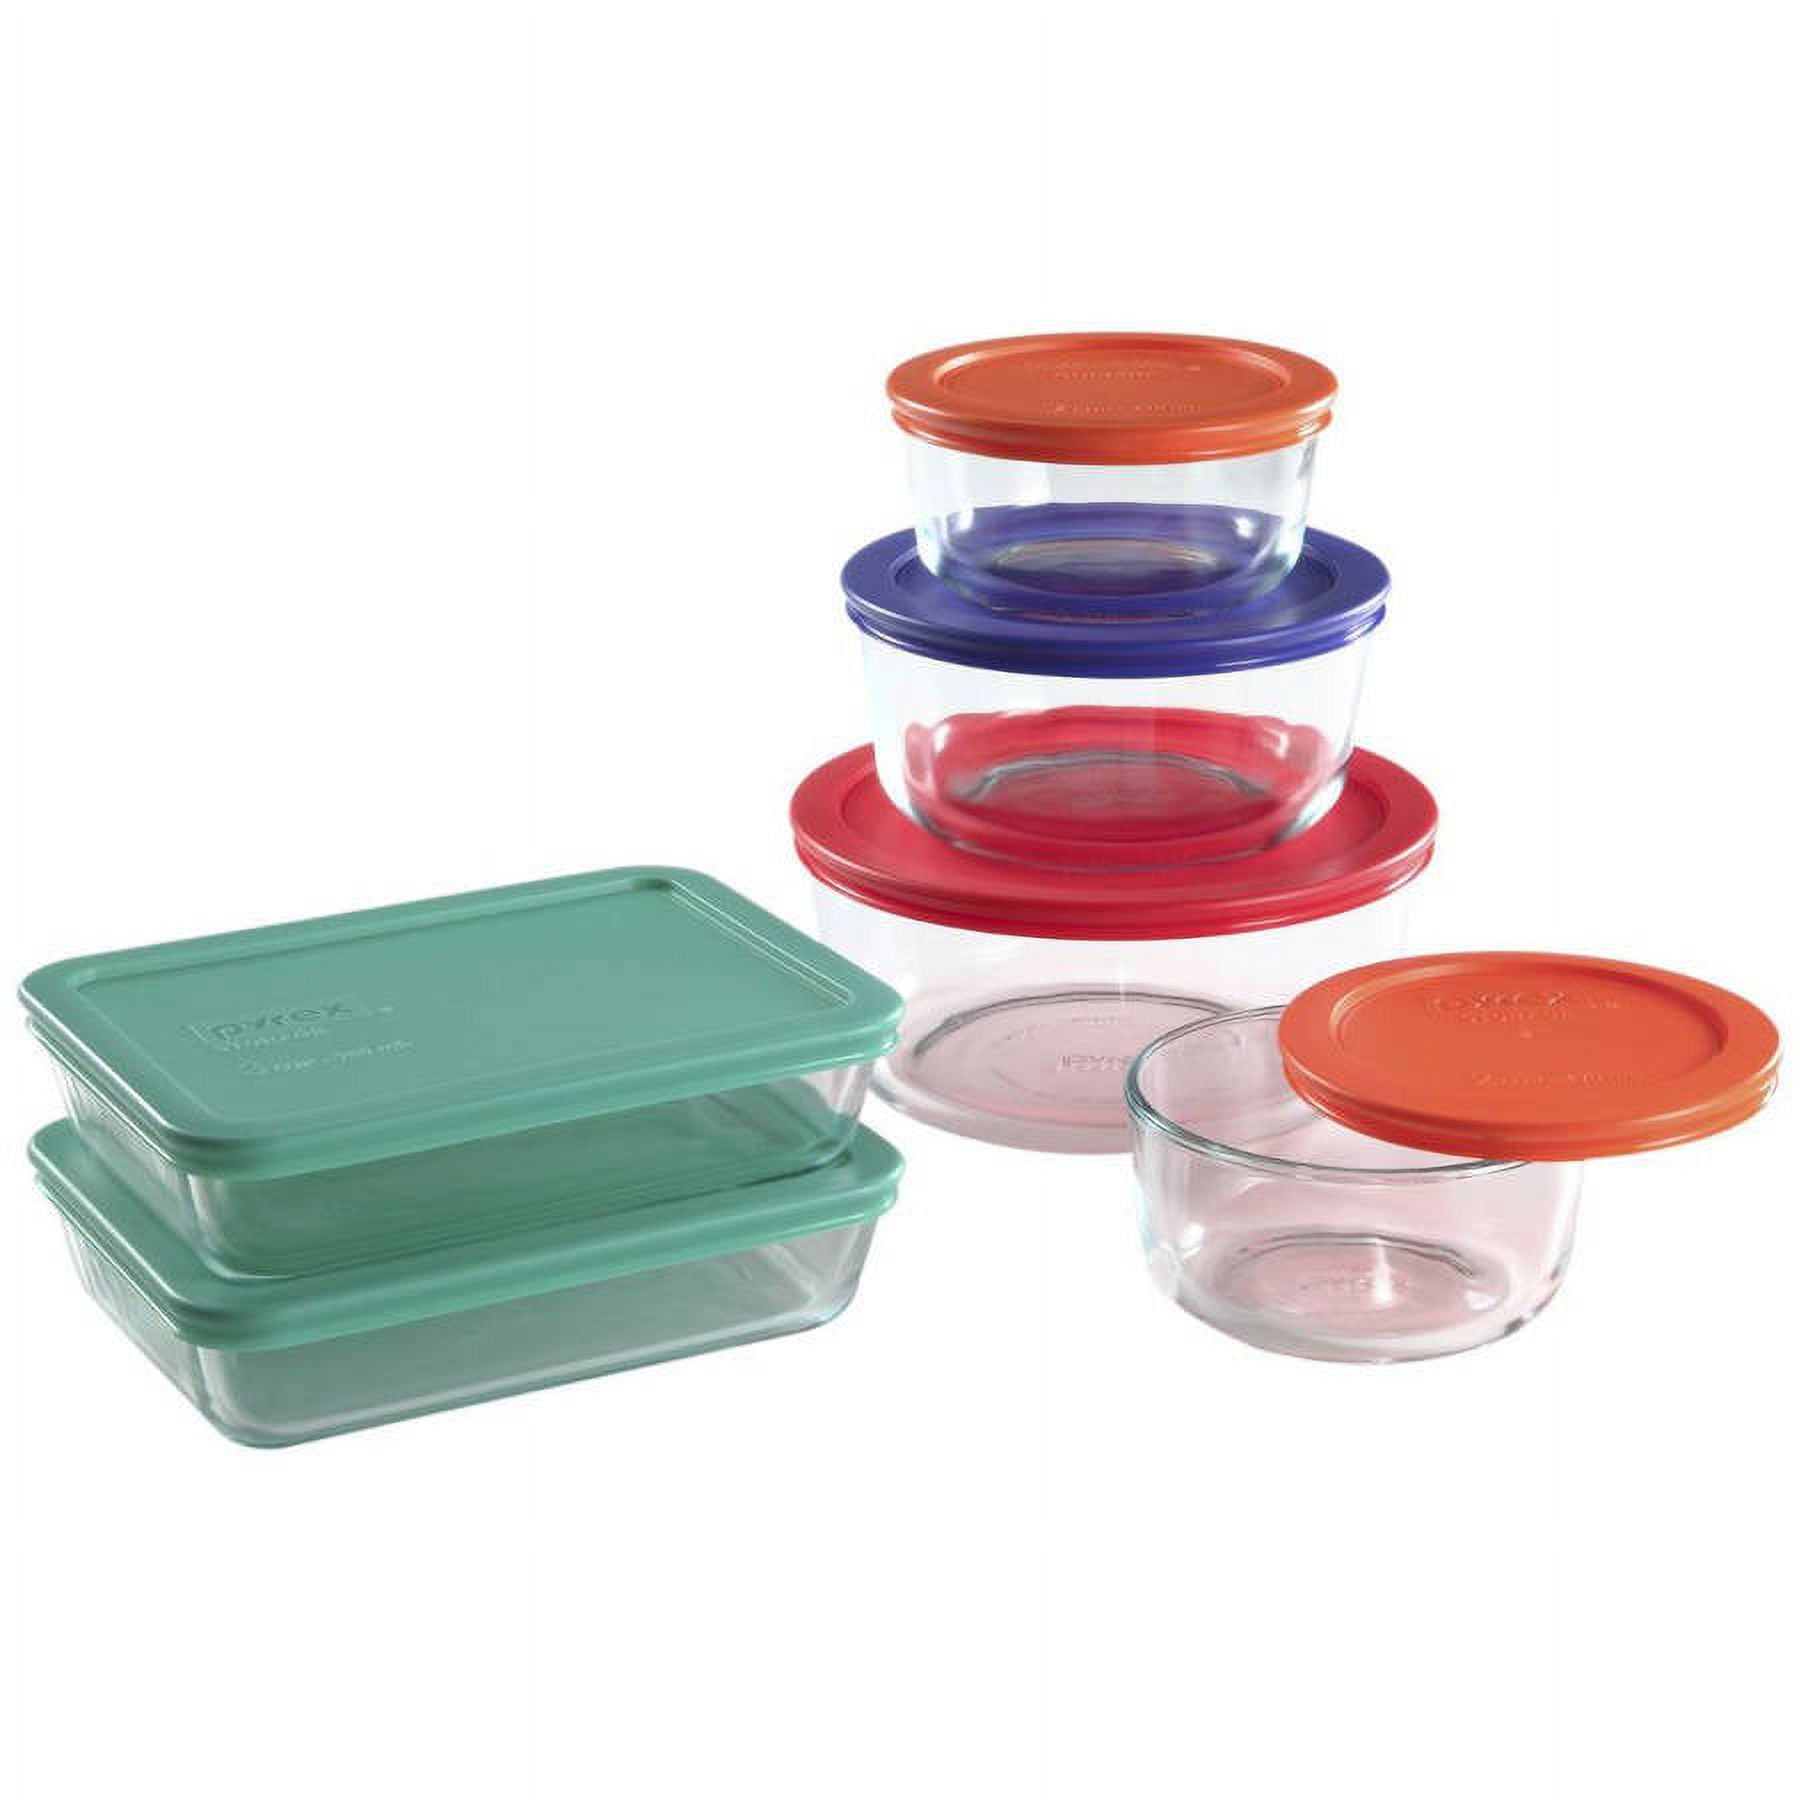 Pyrex Food Storage Glass Bakeware Set with Color Lids, 12 Piece